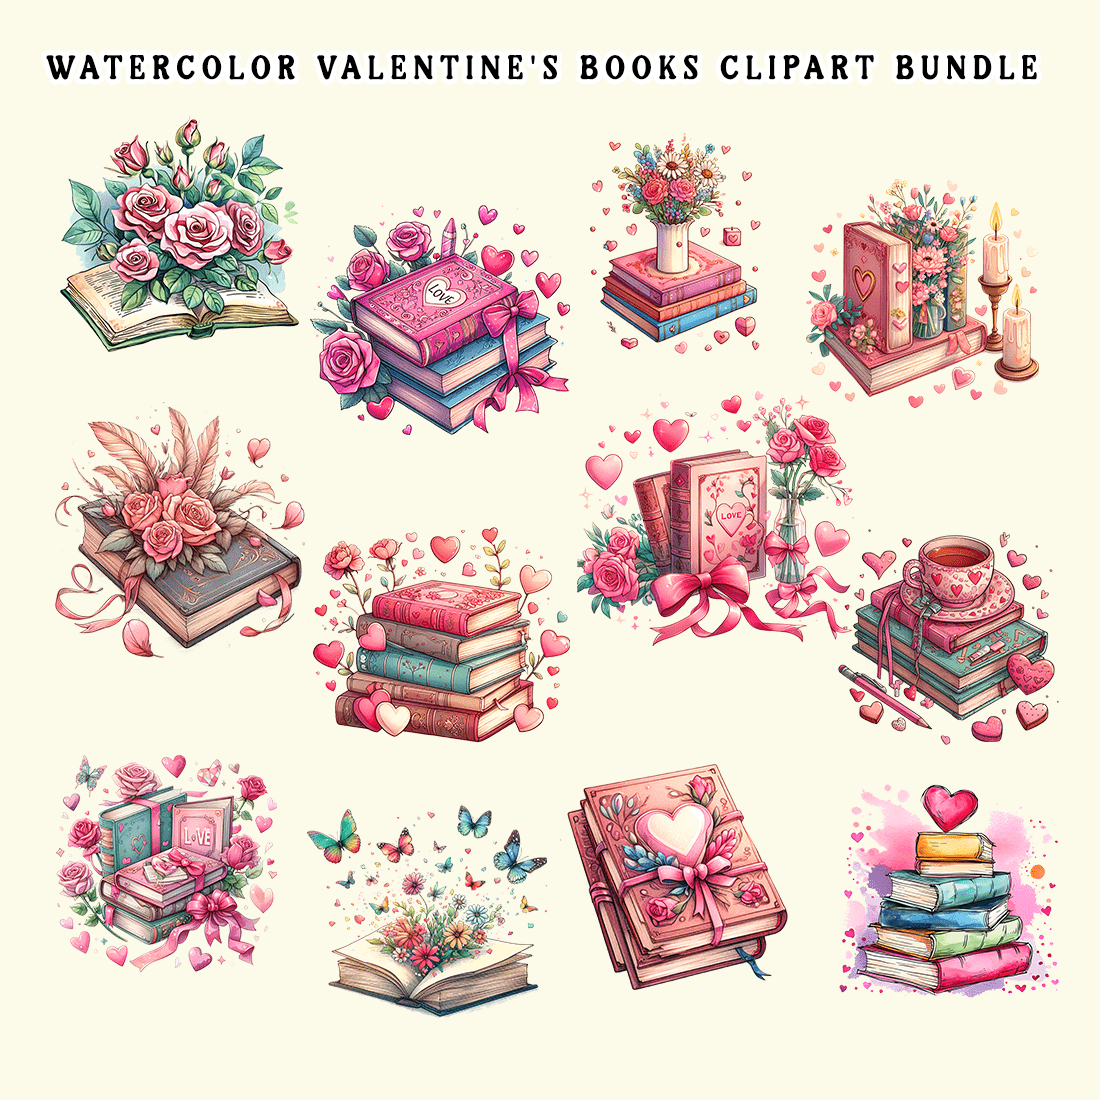 Watercolor Valentine's Books Clipart Bundle preview image.